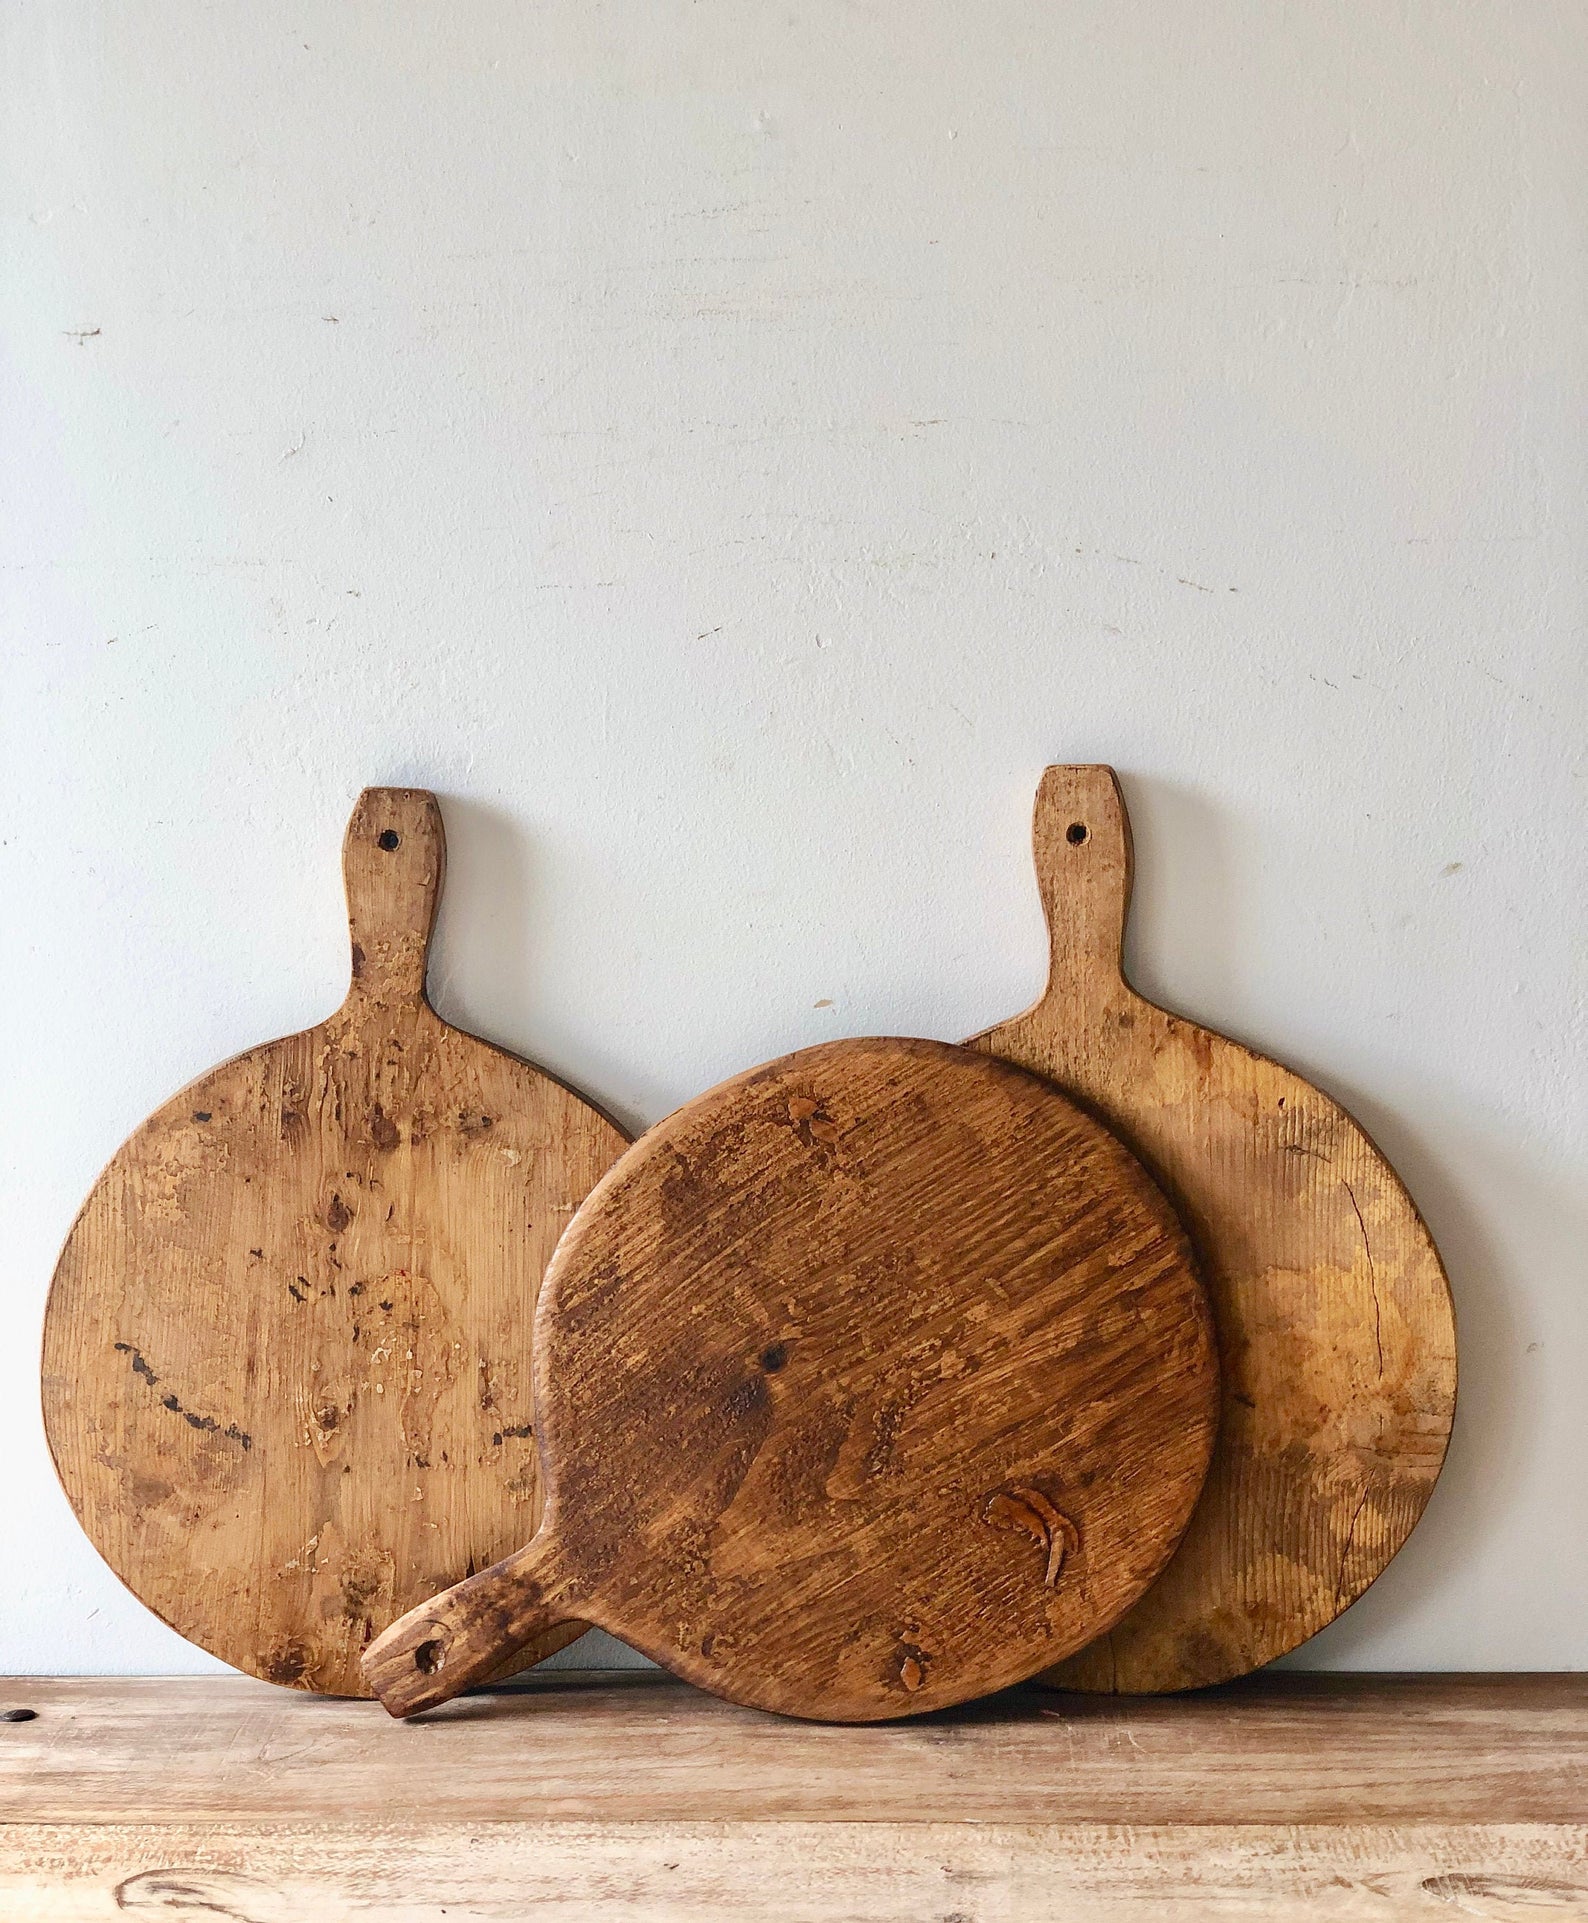 Rustic European breadboards add wonderful texture